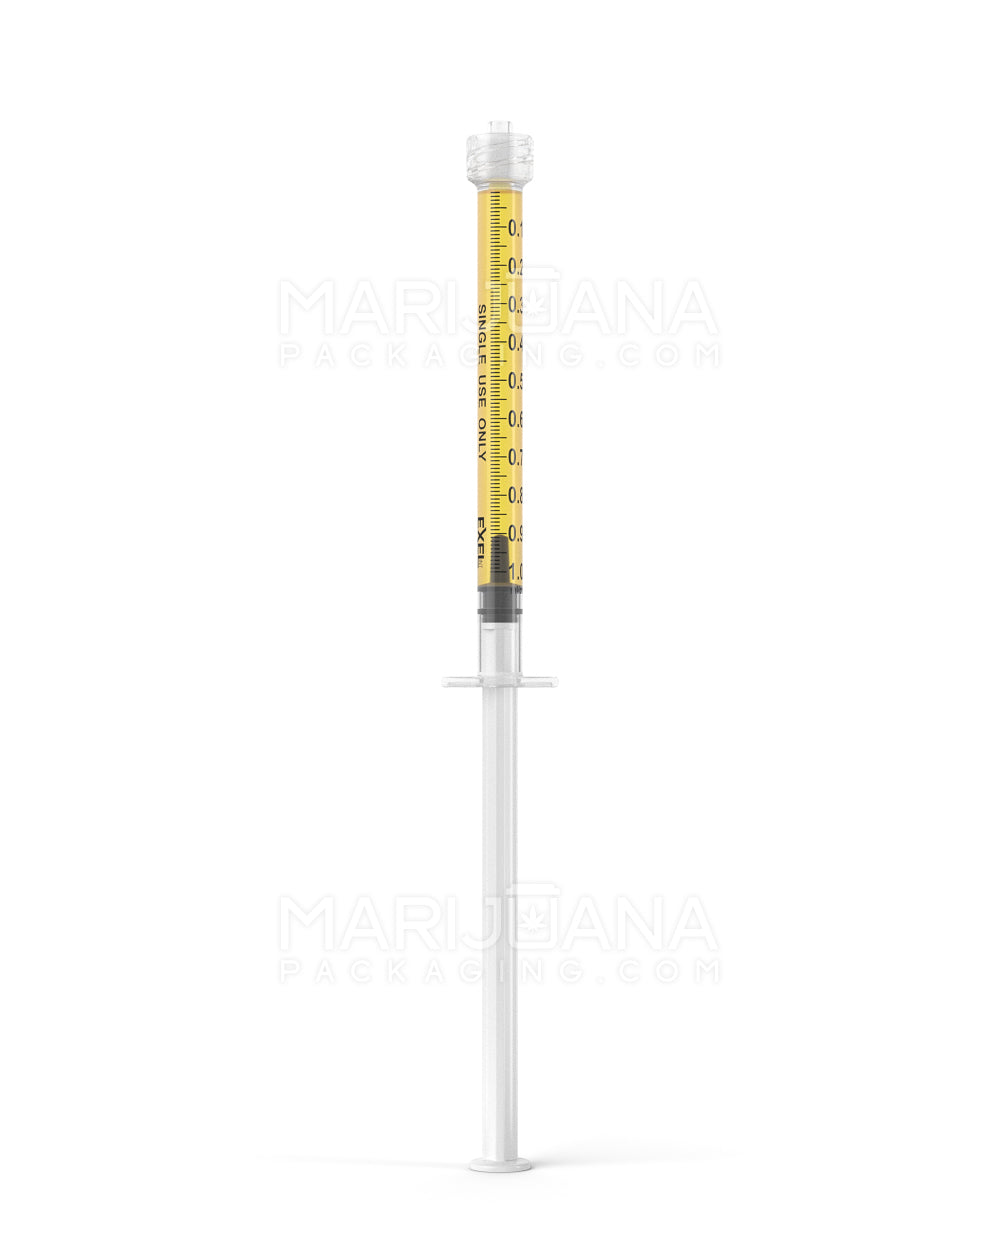 Luer Lock | Plastic Dab Applicator Syringes | 1mL - 0.1mL Increments - 100 Count - 2